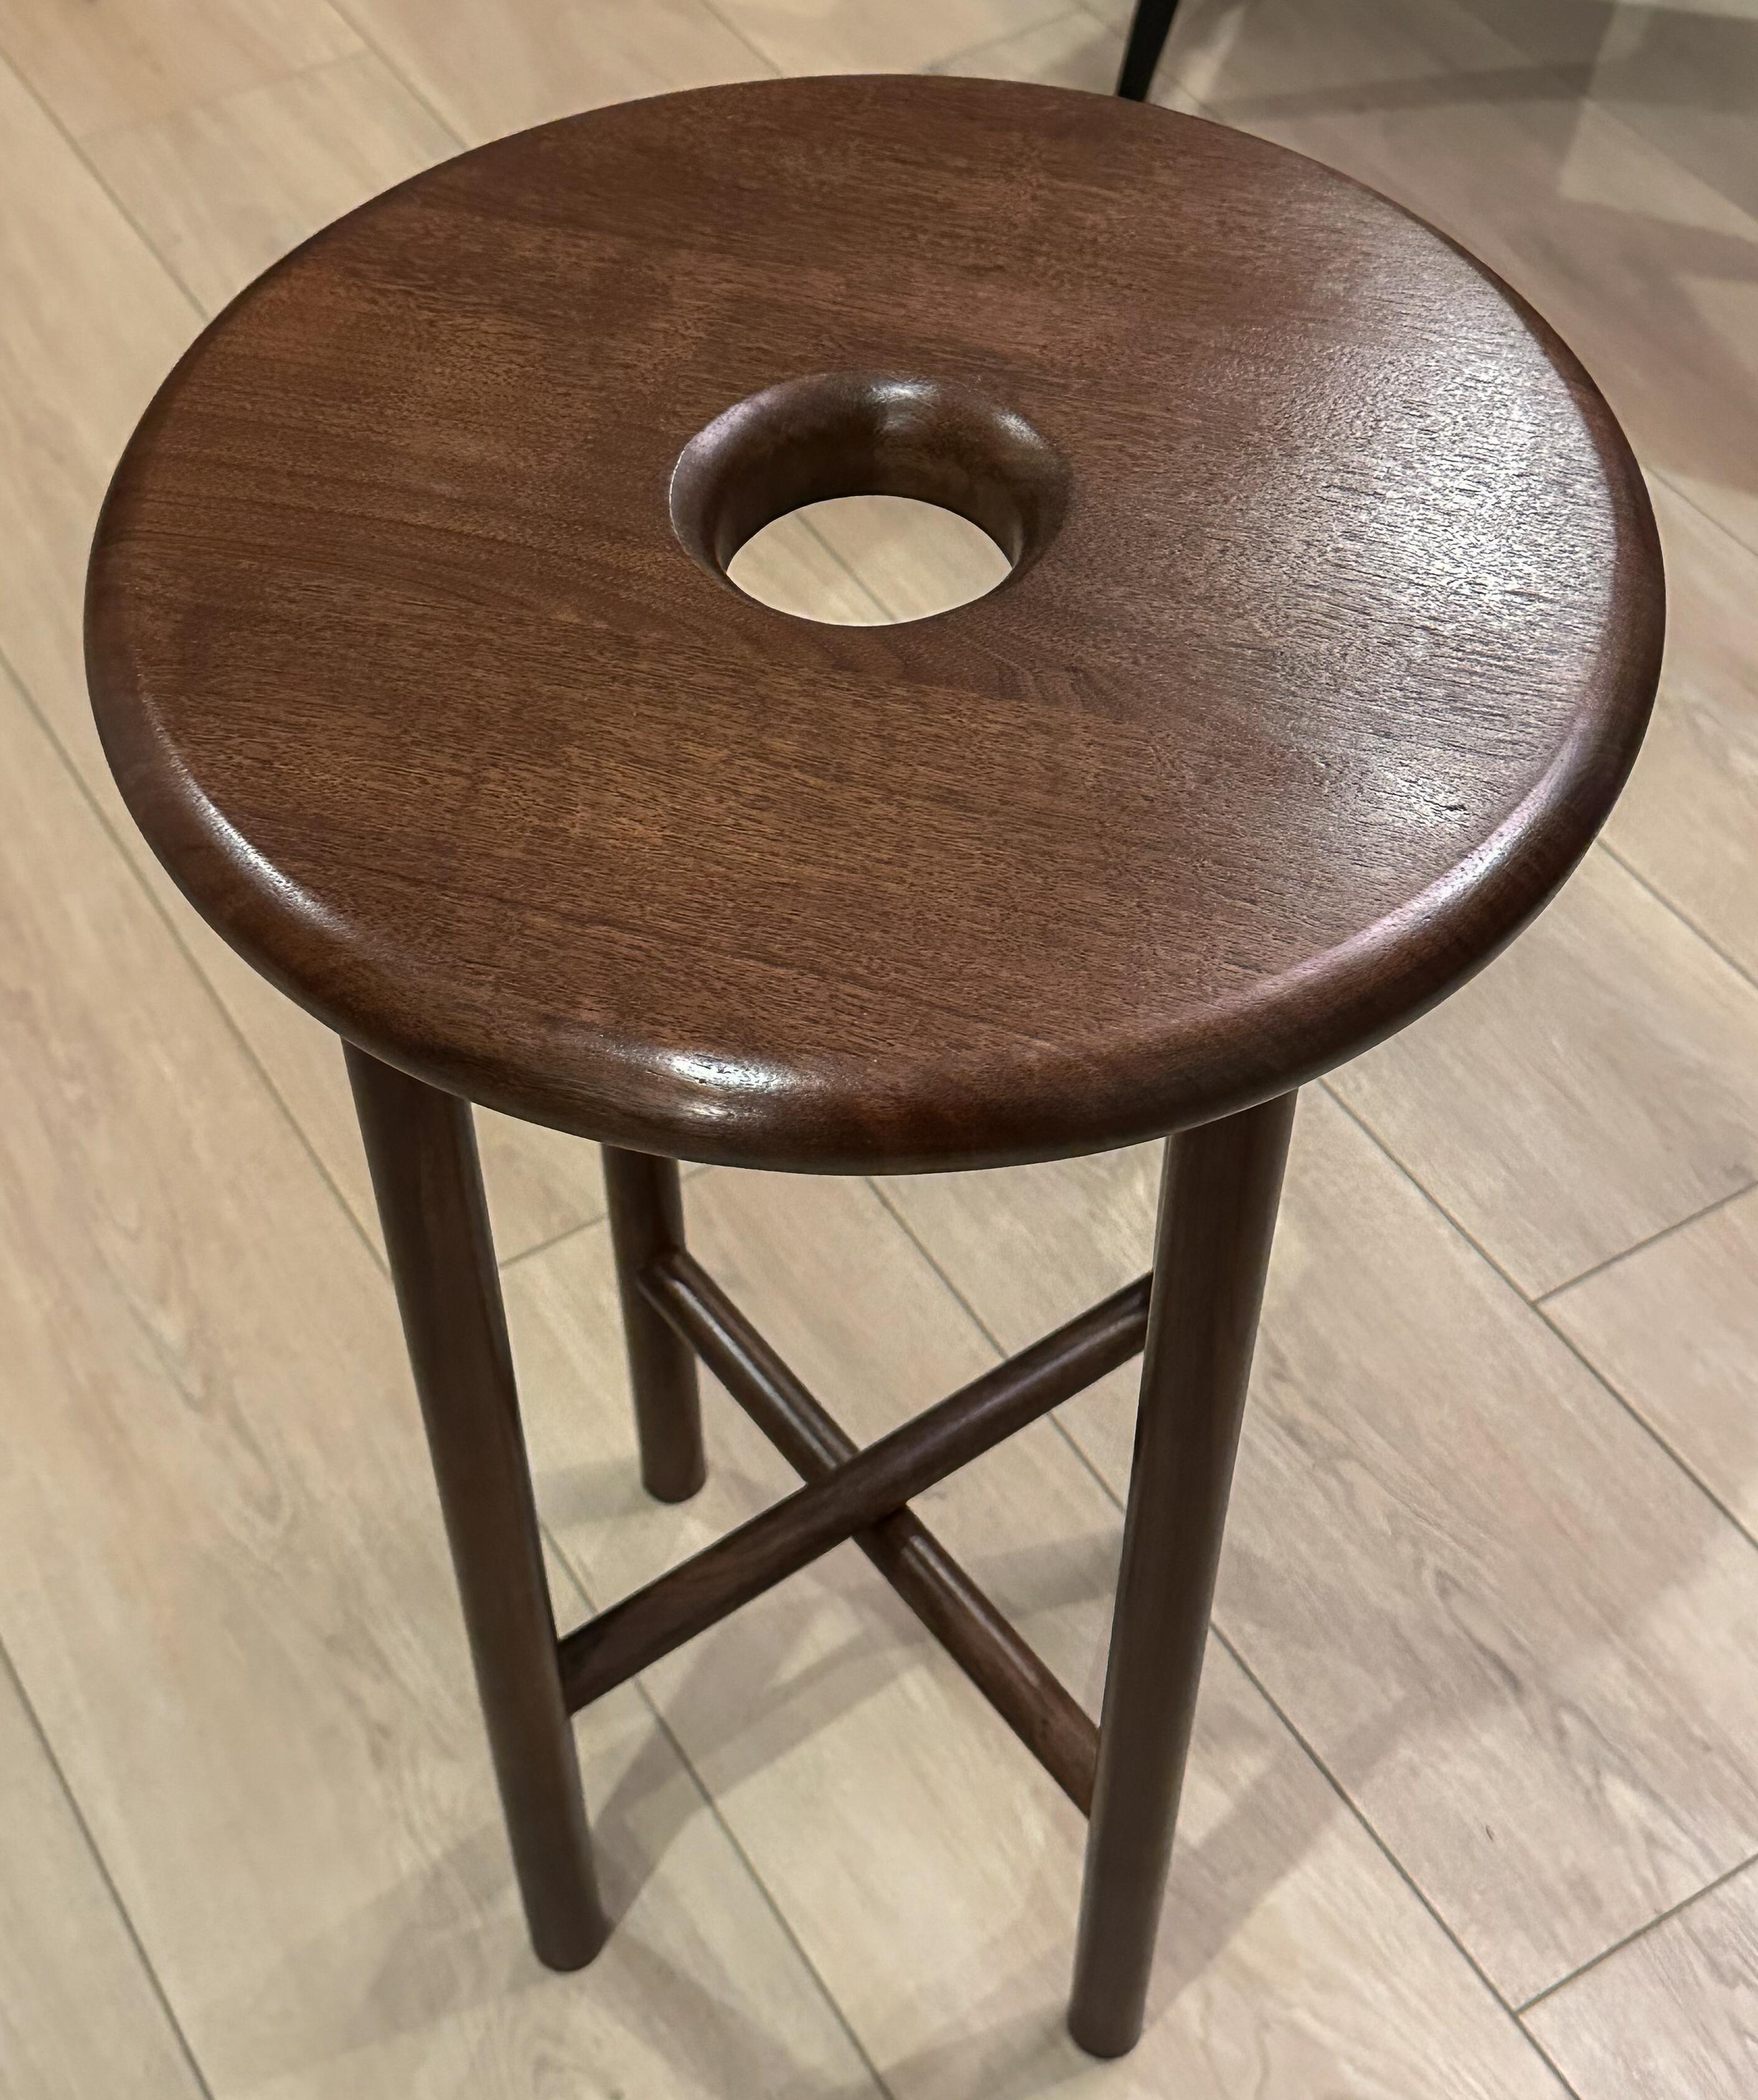 Custom American walnut bar stools with decorative 3